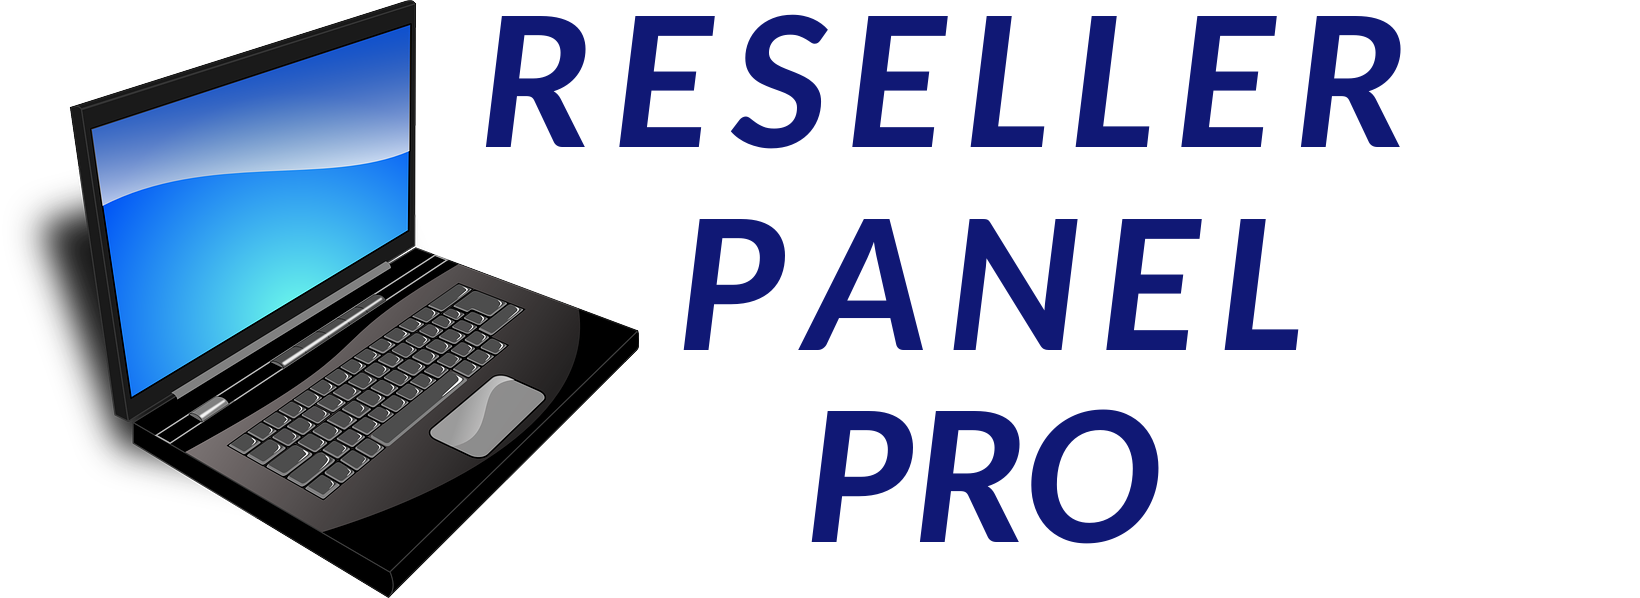 Reseller Panel Pro